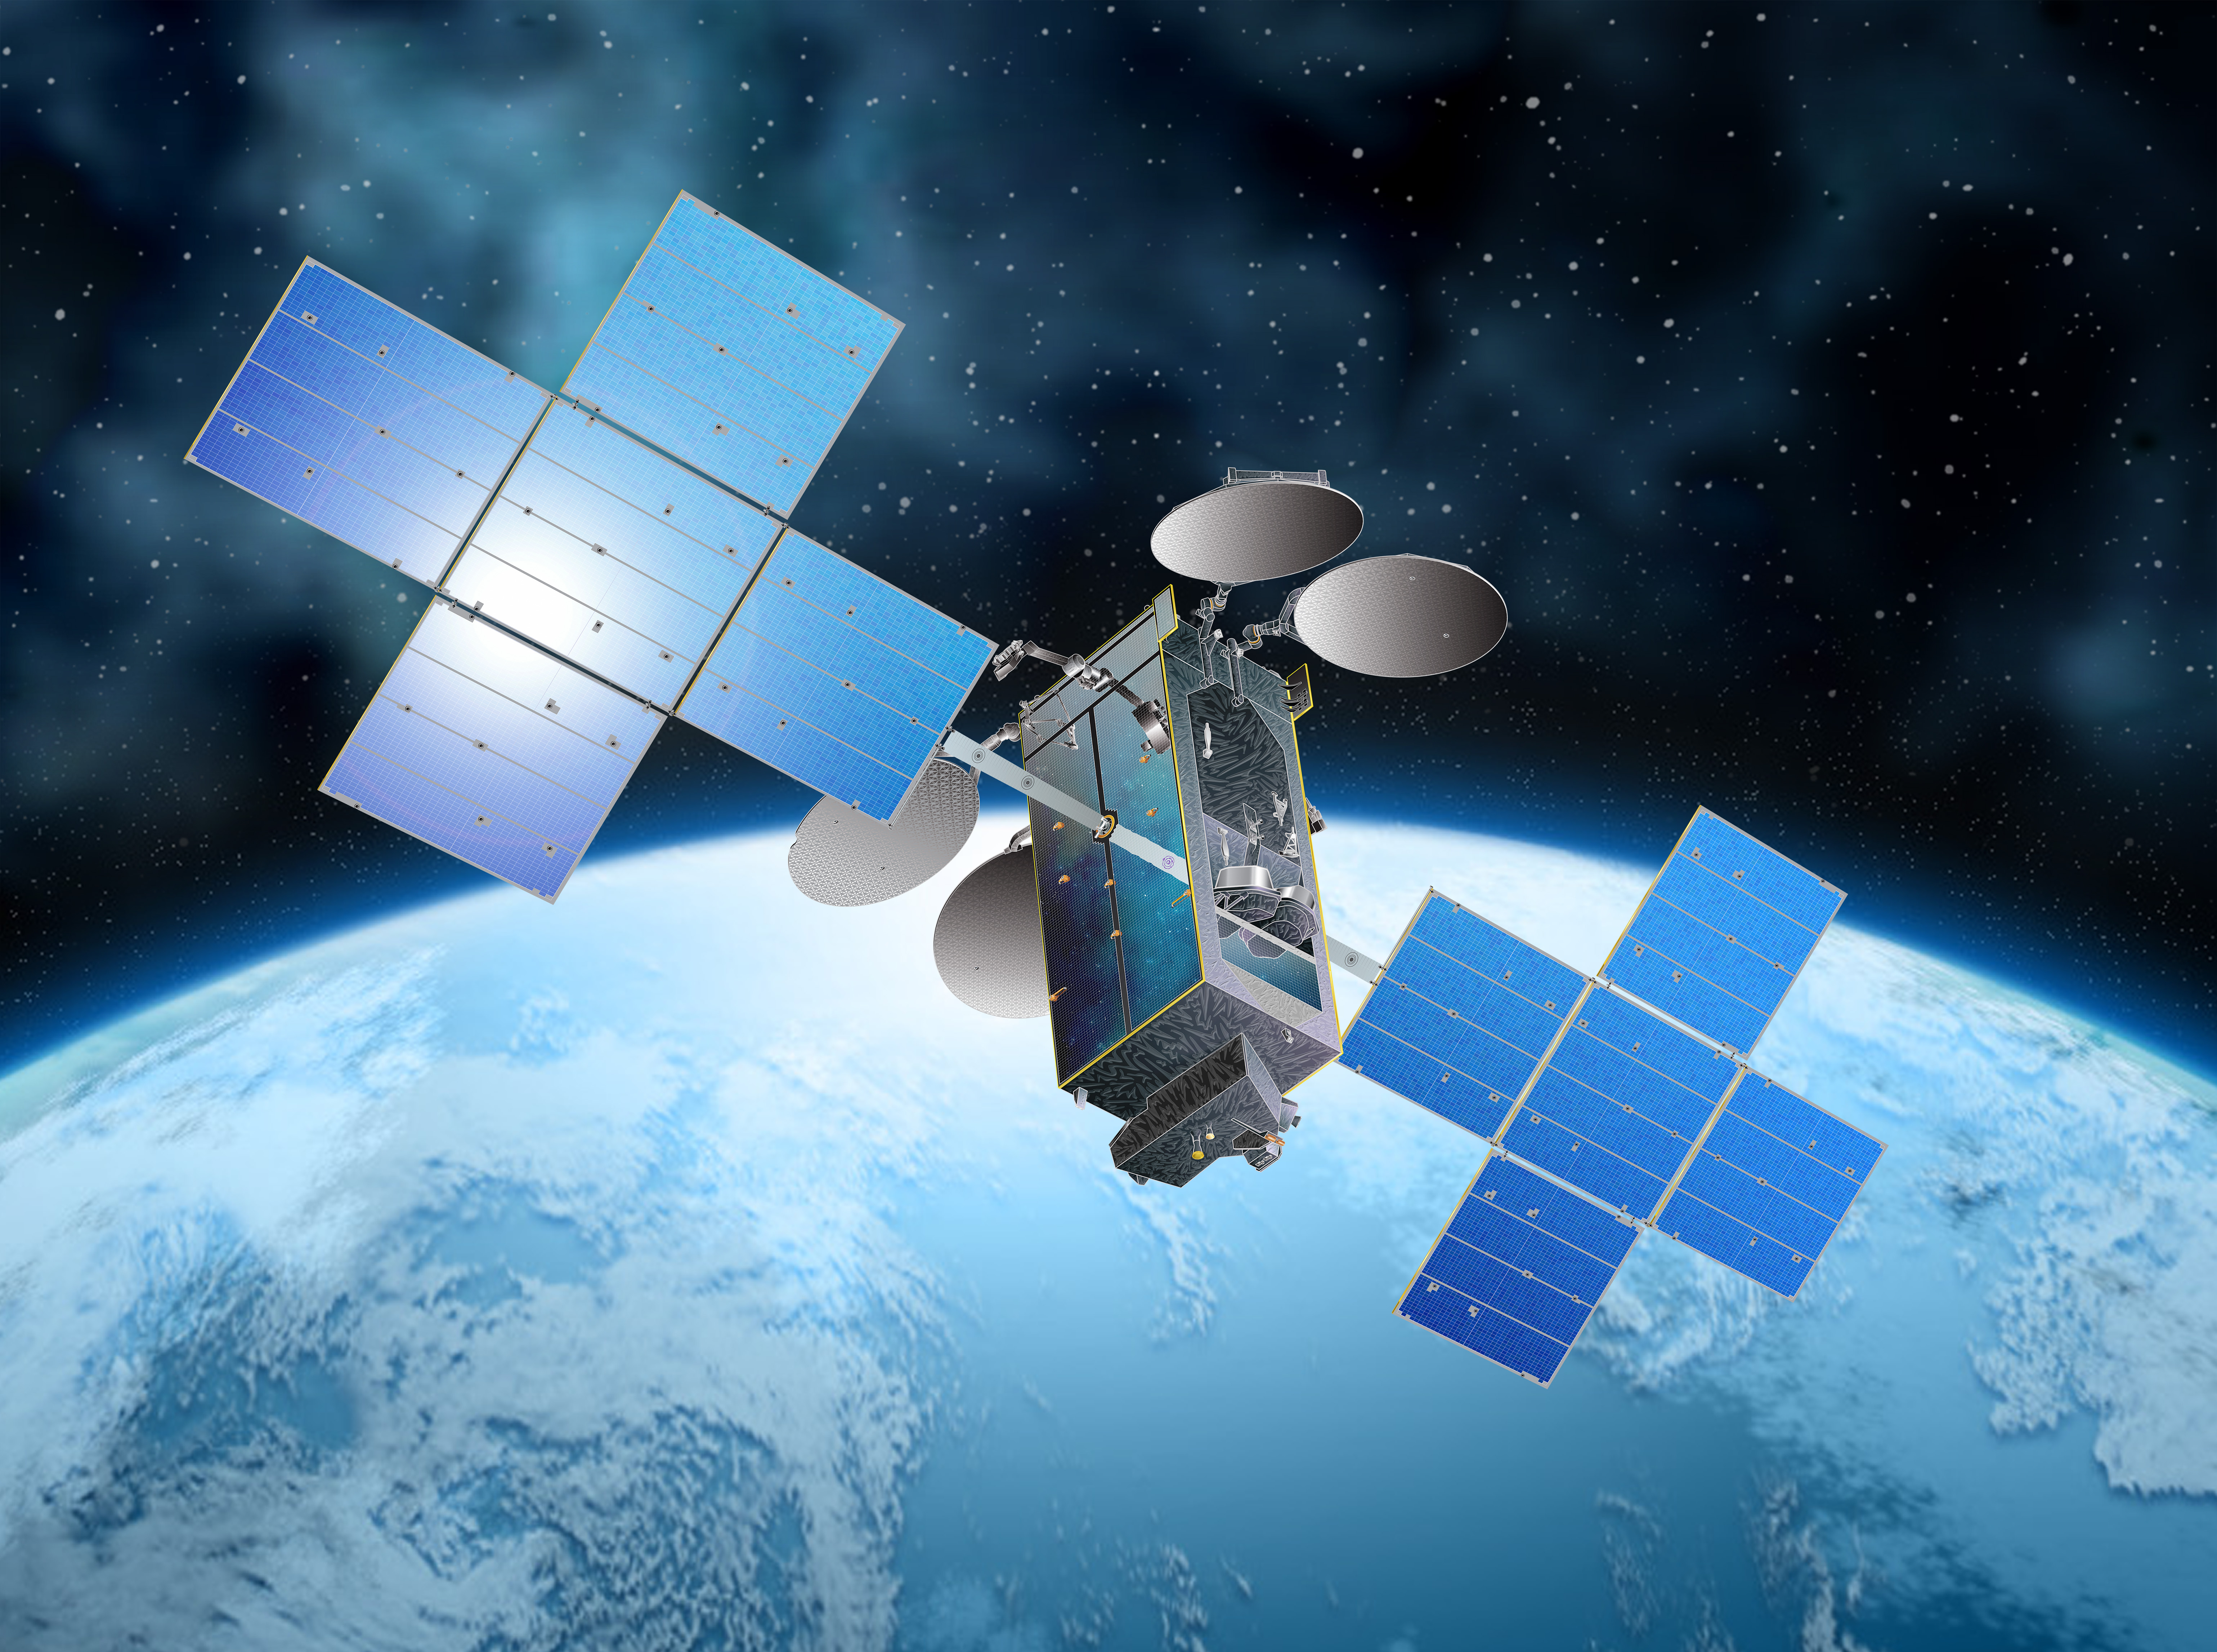 SSL to Provide Transformational Broadband Satellite for Hughes